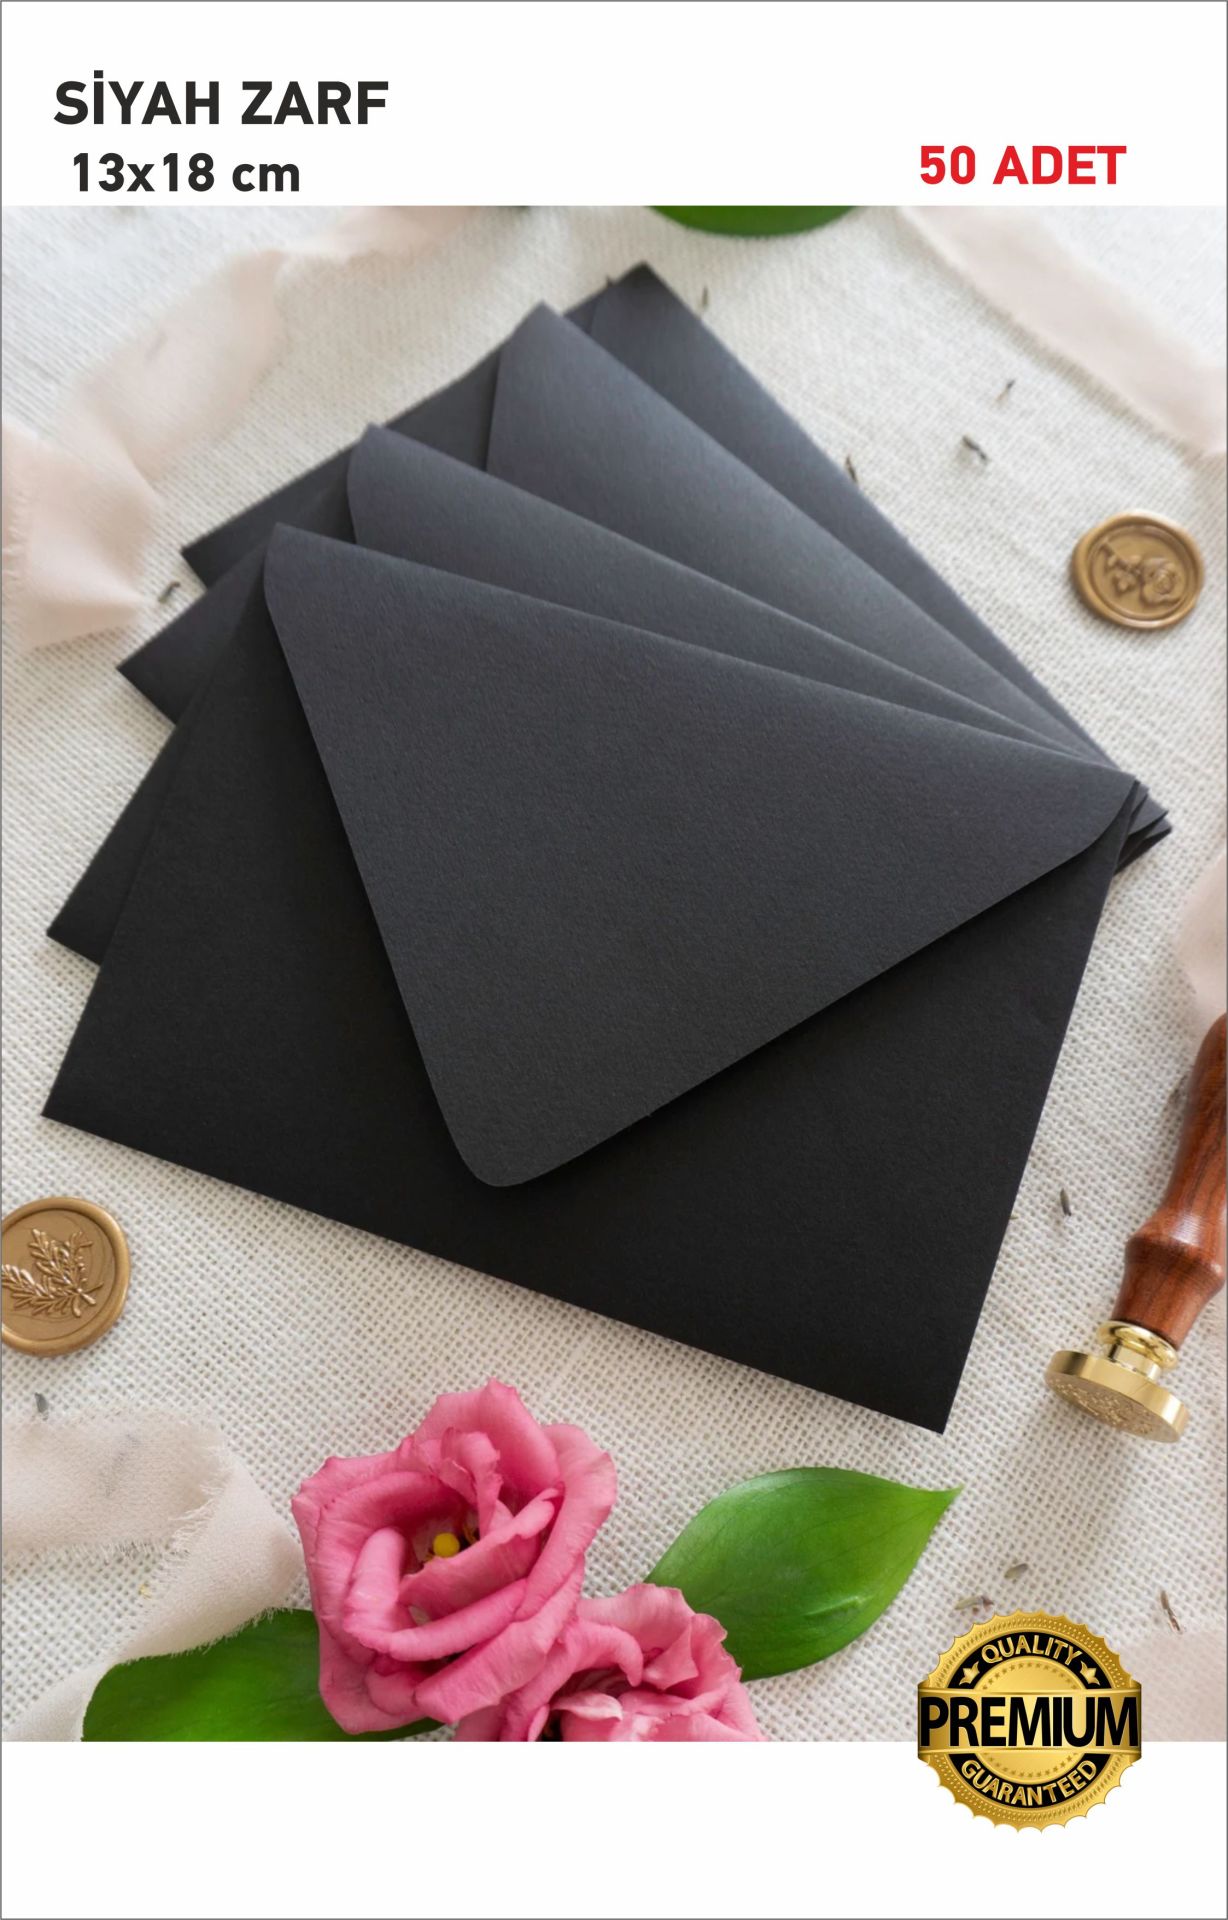 Siyah Zarf Davetiye Zarfı 13x18 cm 50 Adet